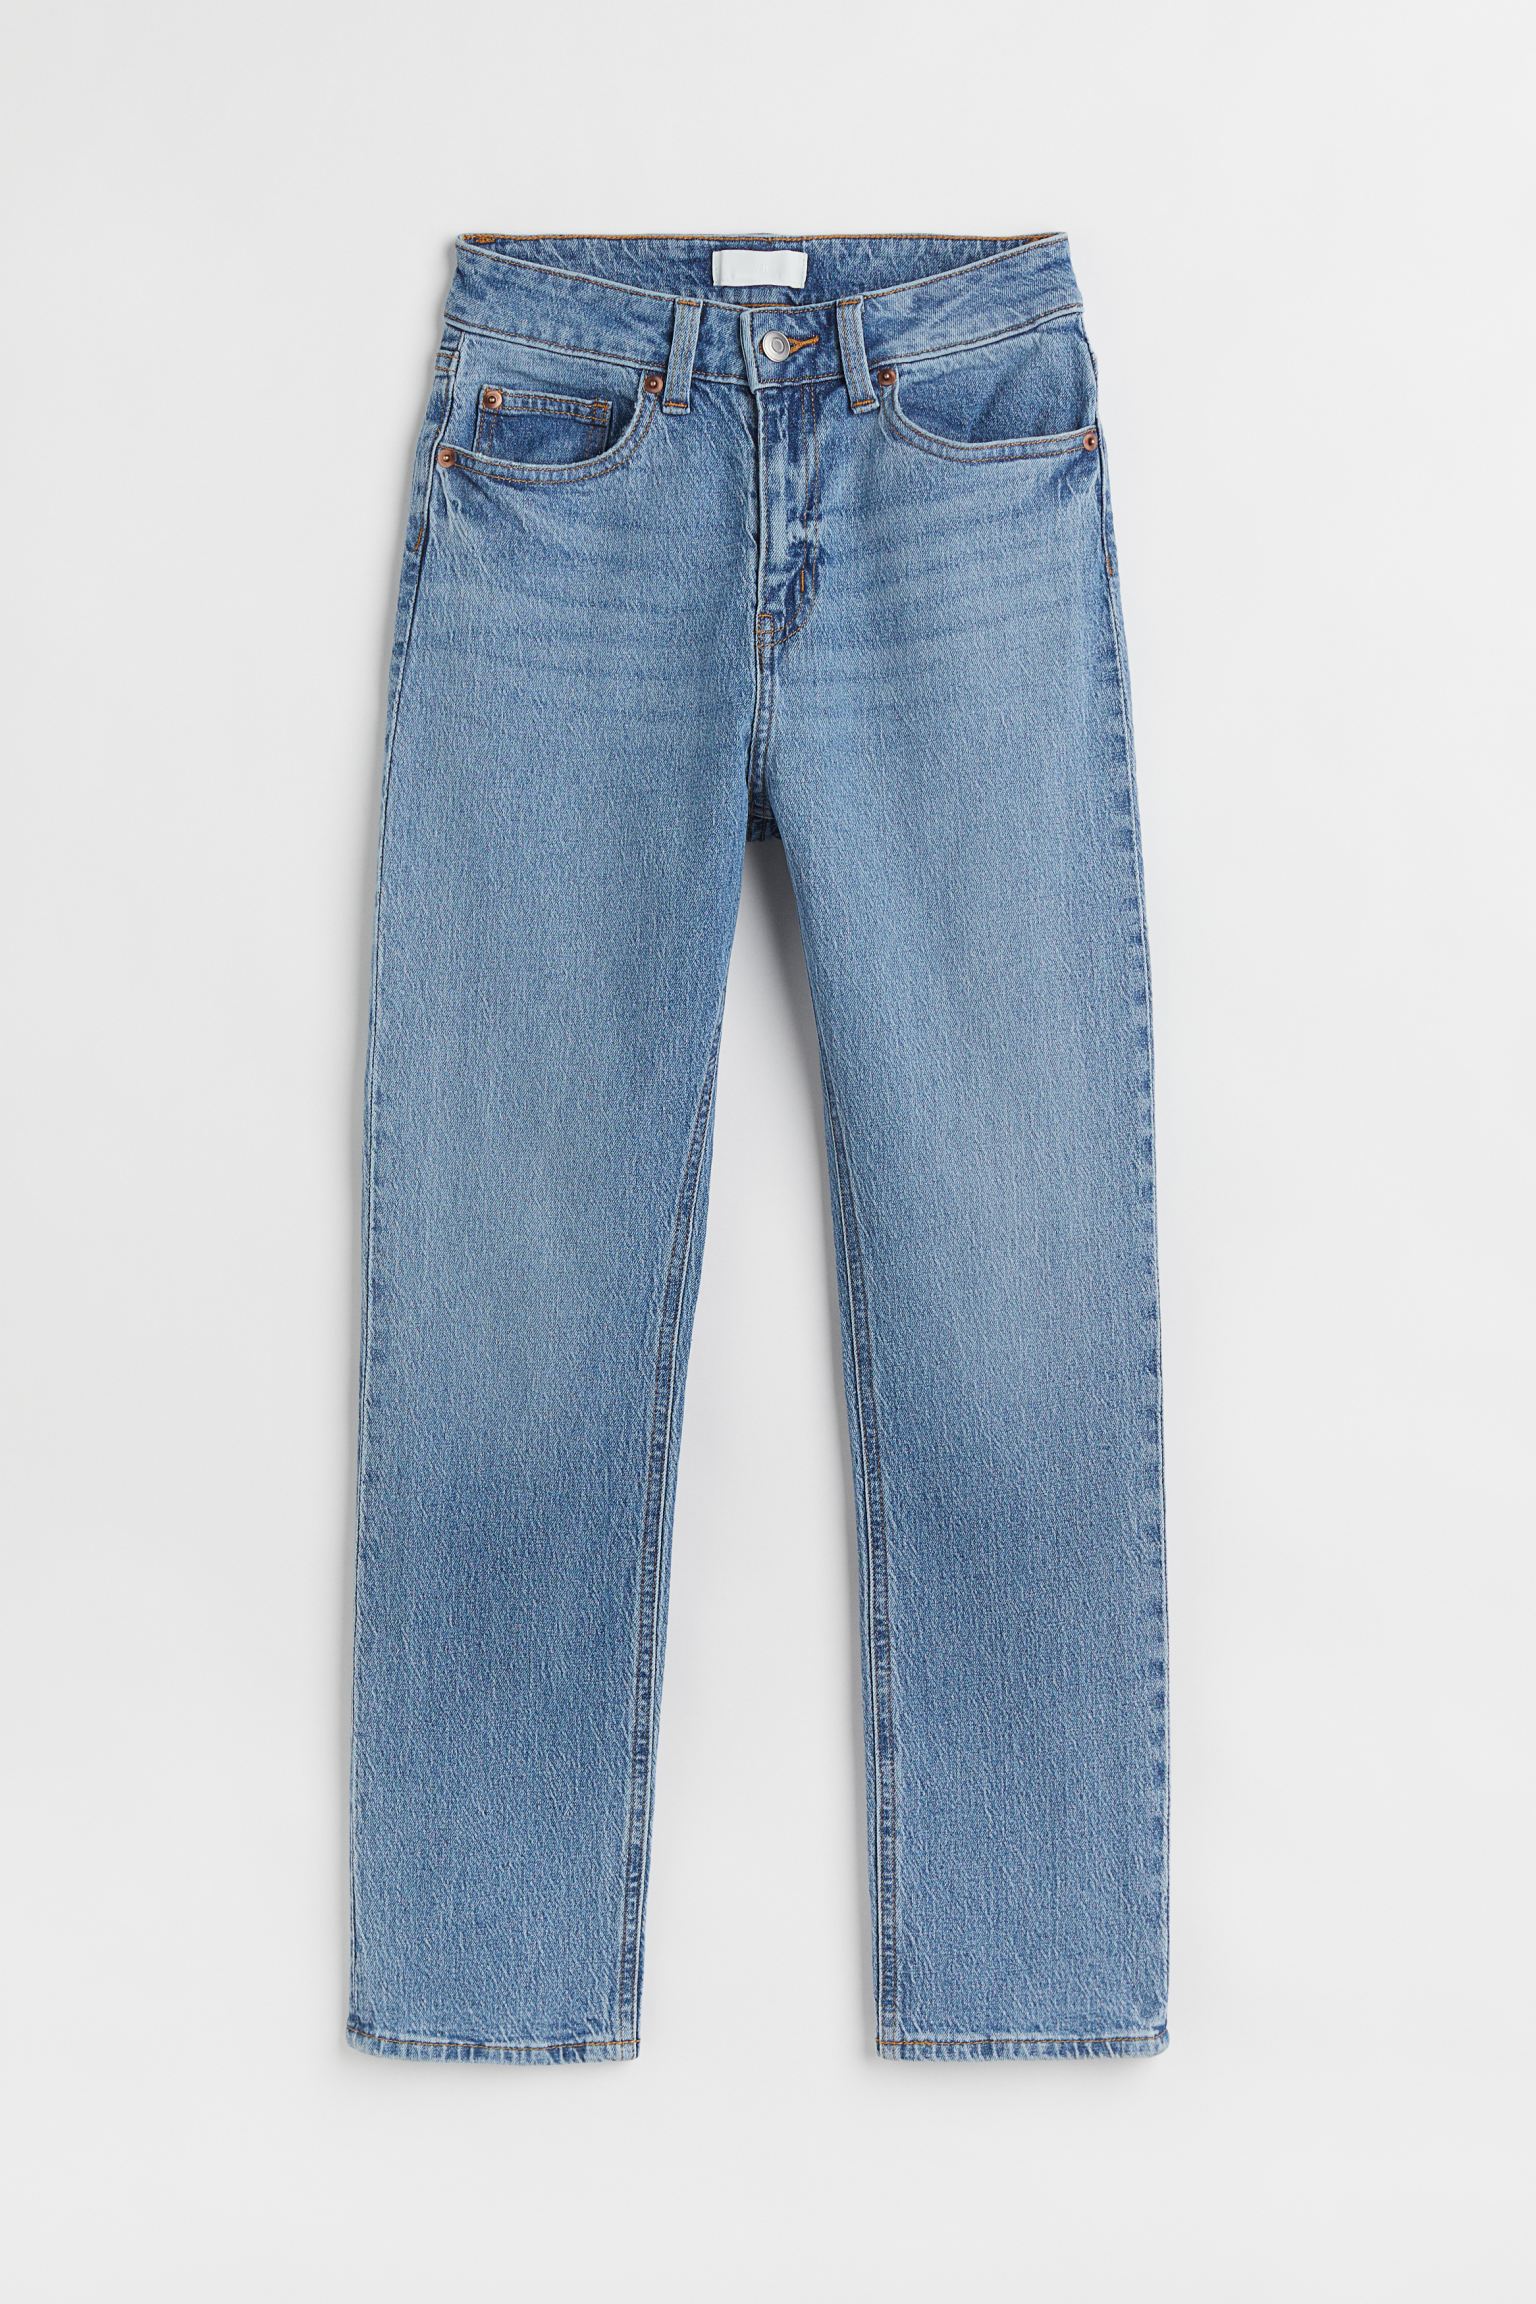 H&M Slim High-Waist Jeans